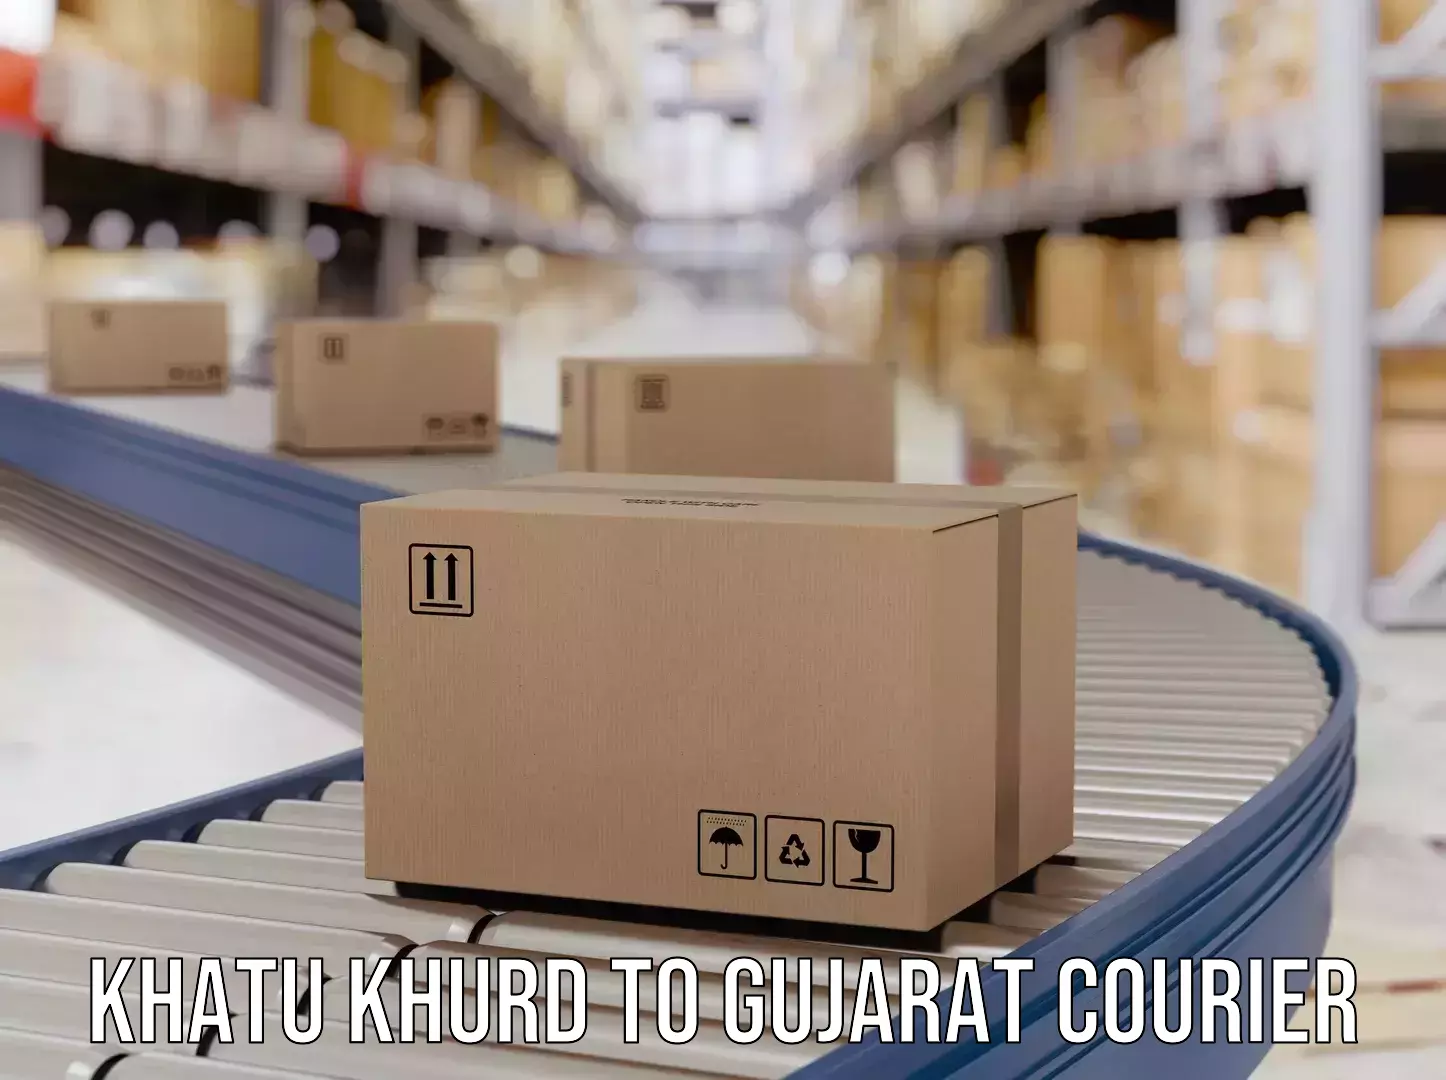 24-hour courier service Khatu Khurd to Matar